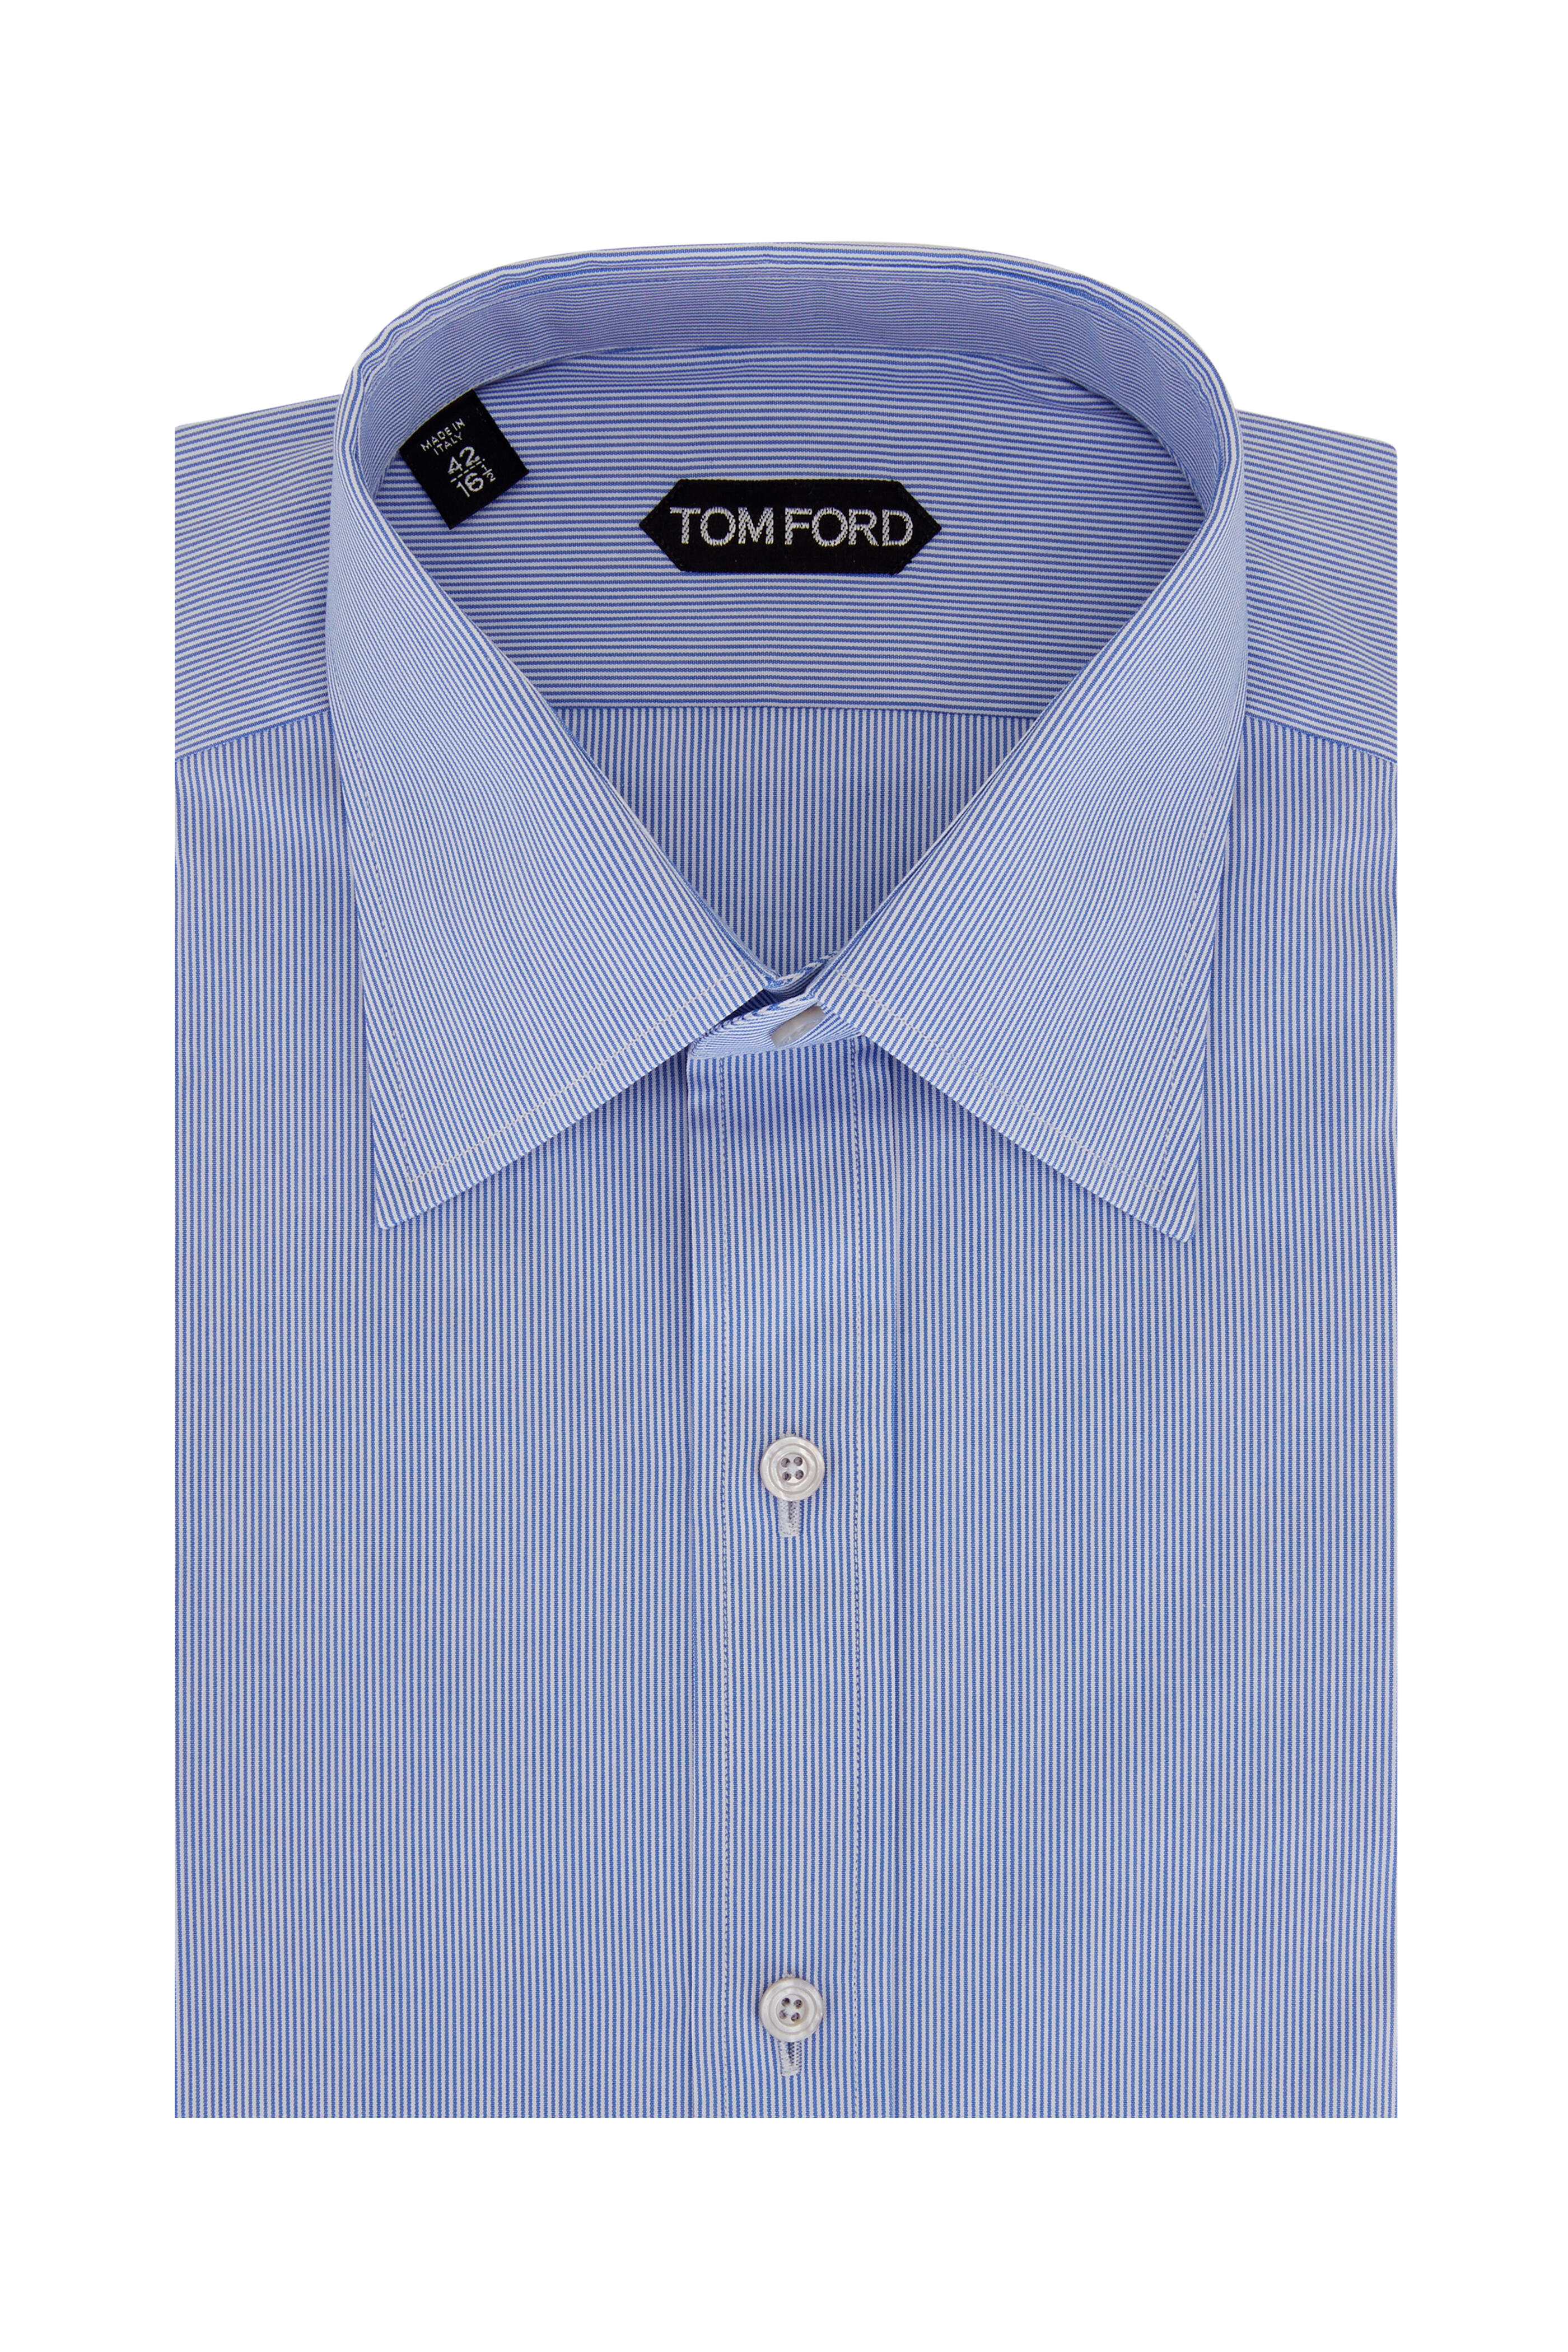 Tom Ford - Blue Micro Stripe Dress Shirt | Mitchell Stores